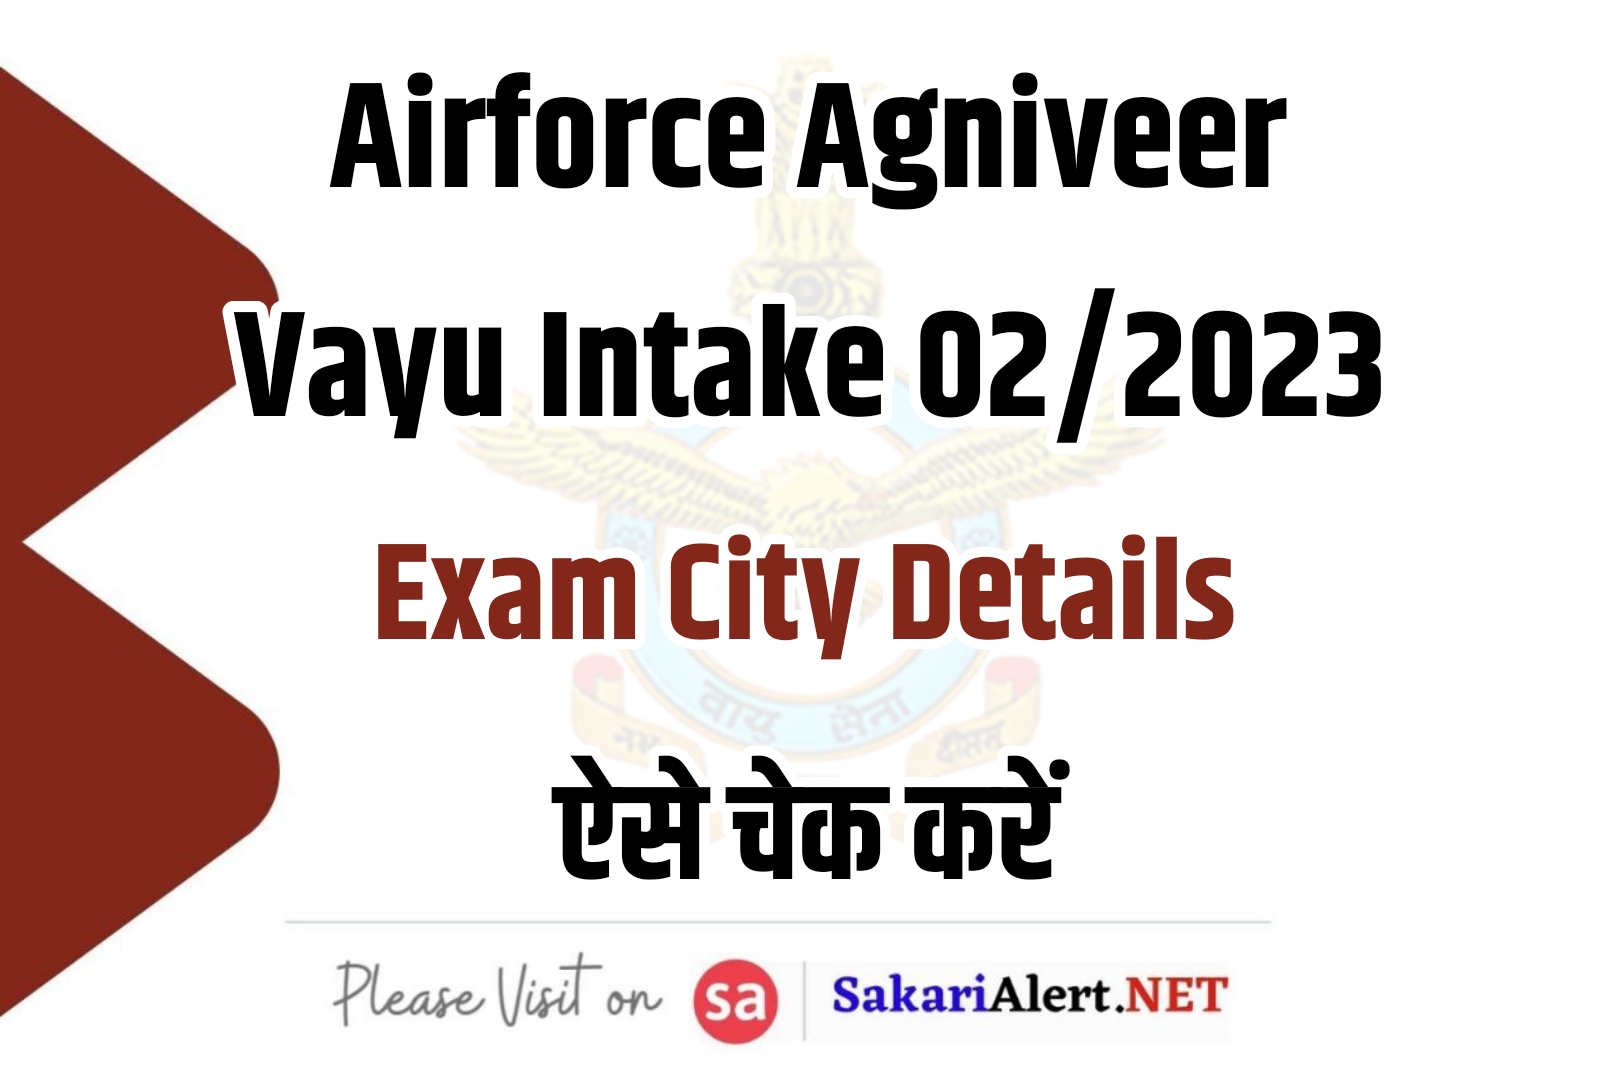 Airforce Agniveer Vayu Intake 02/2023 Exam City Details